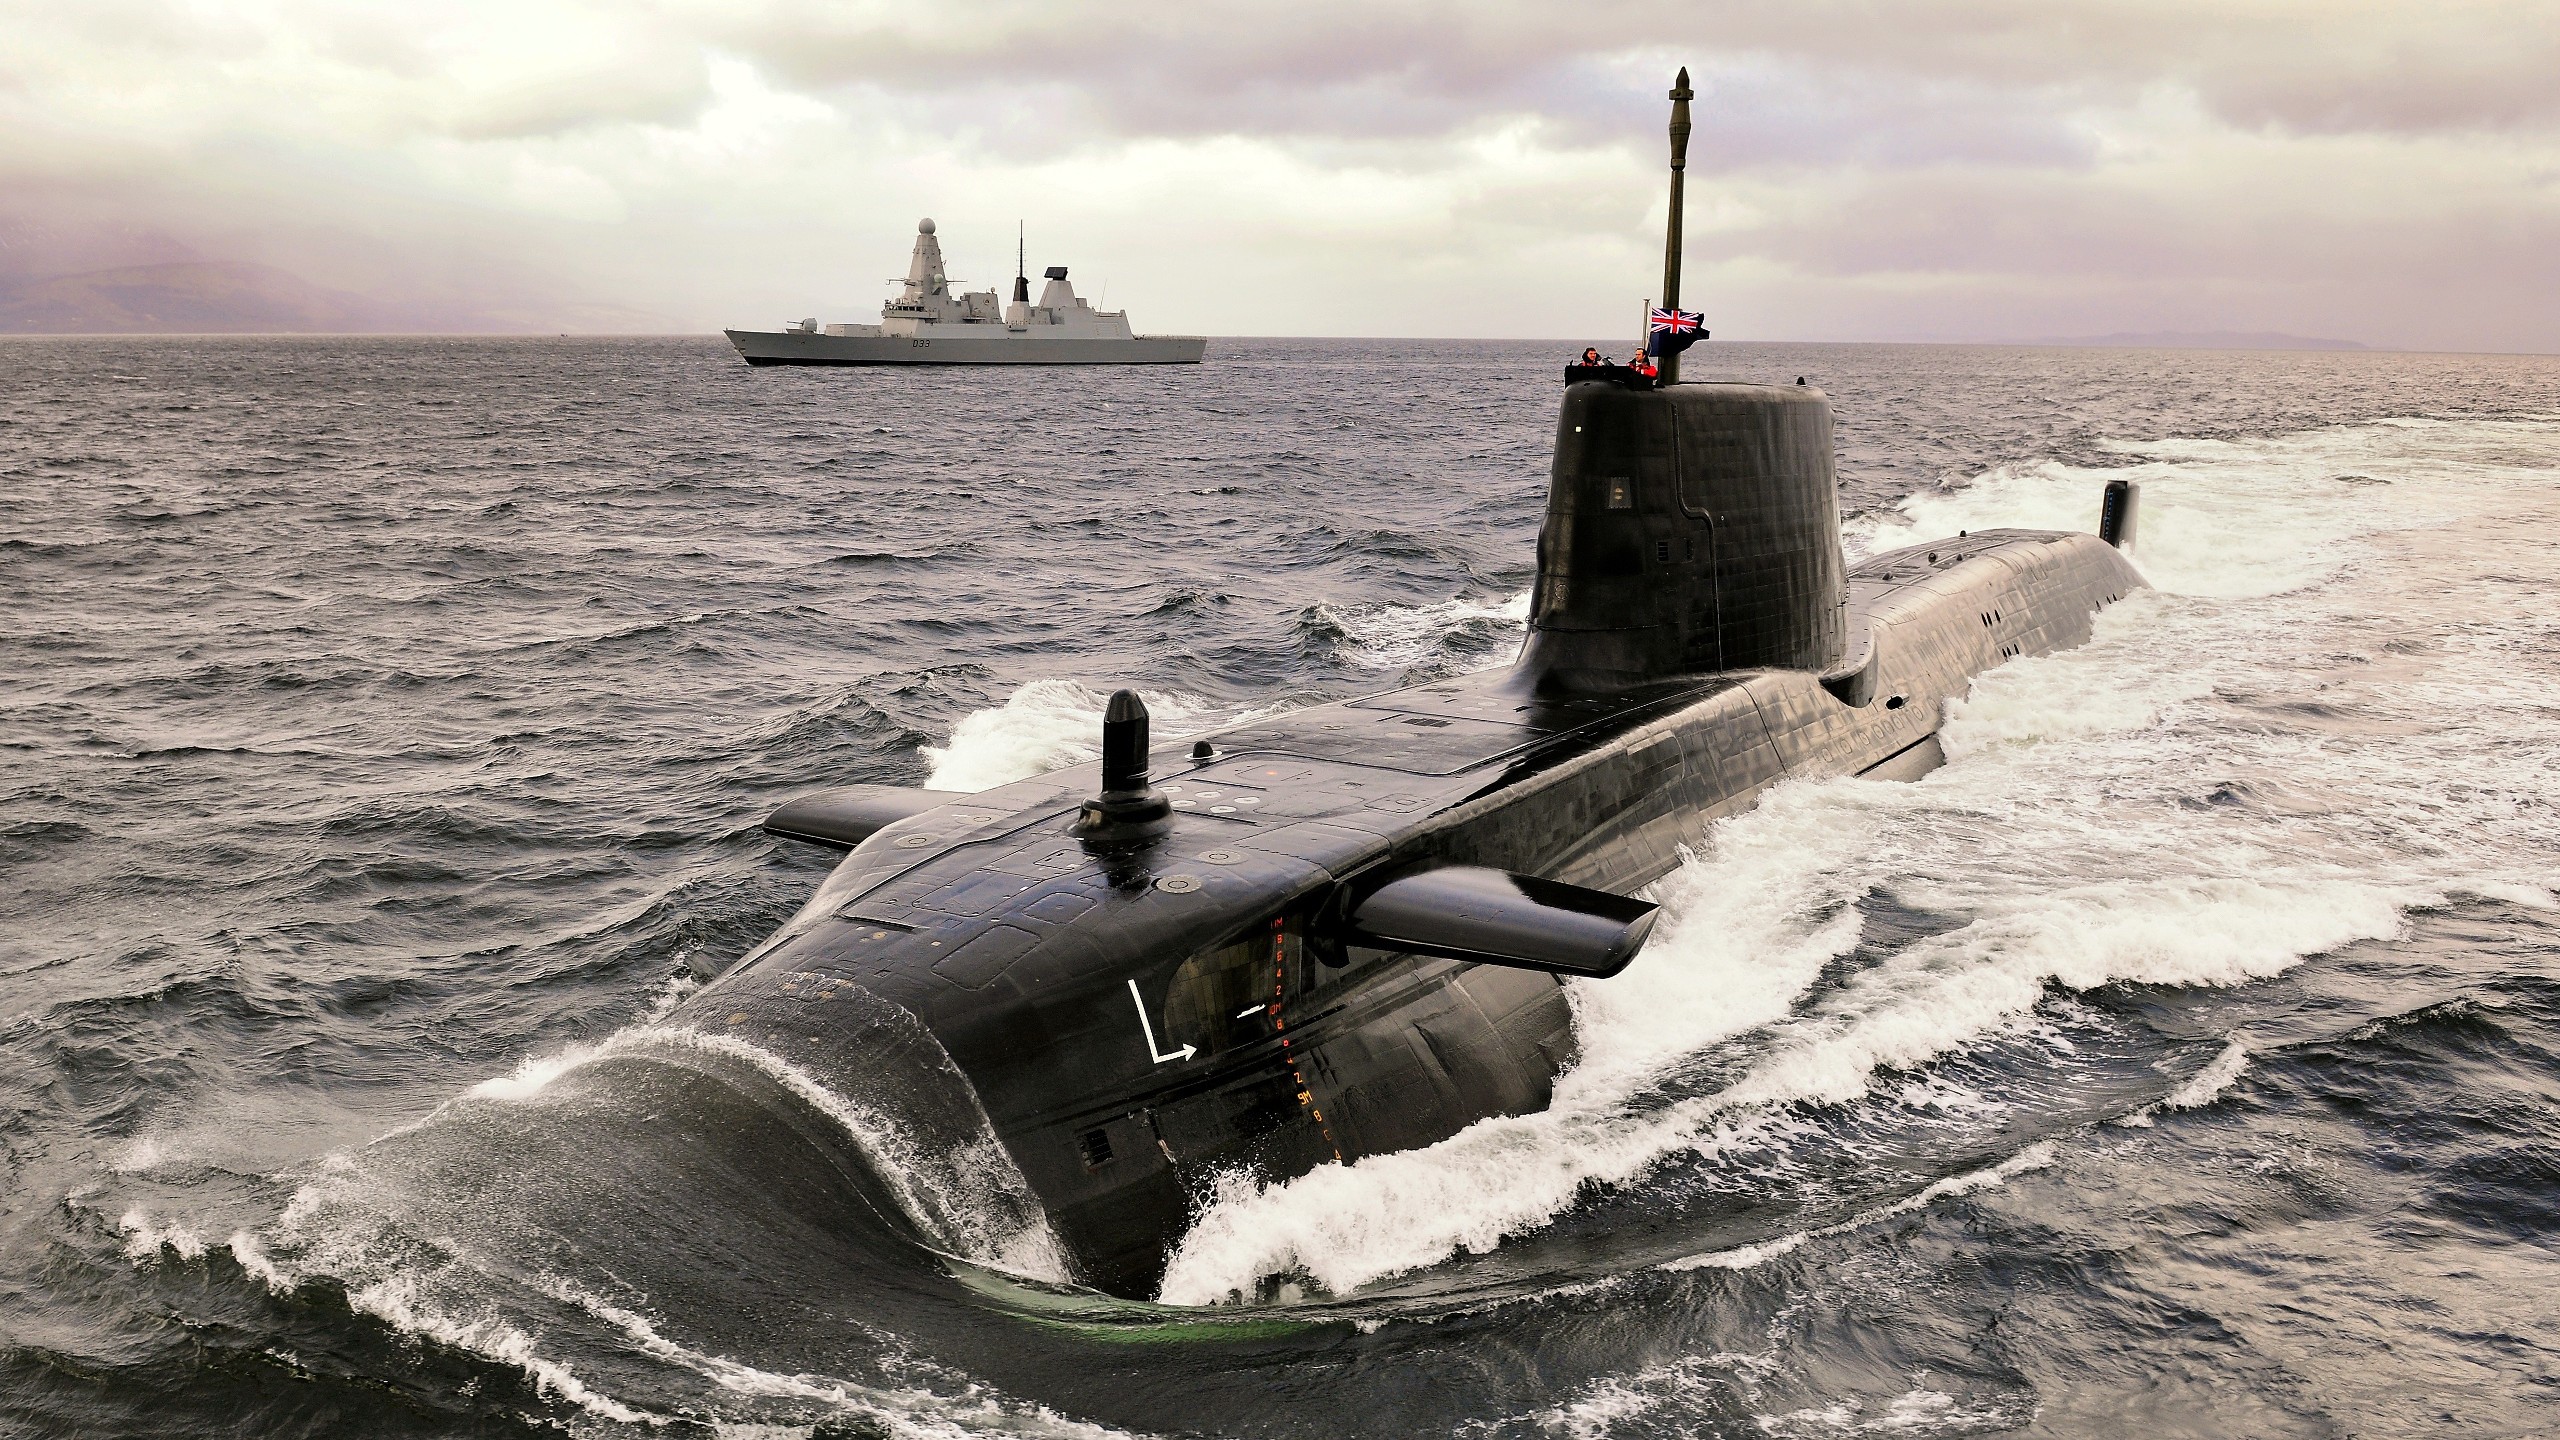 General 2560x1440 military submarine navy Astute-class submarine Royal Navy Destroyer ship sea military vehicle vehicle